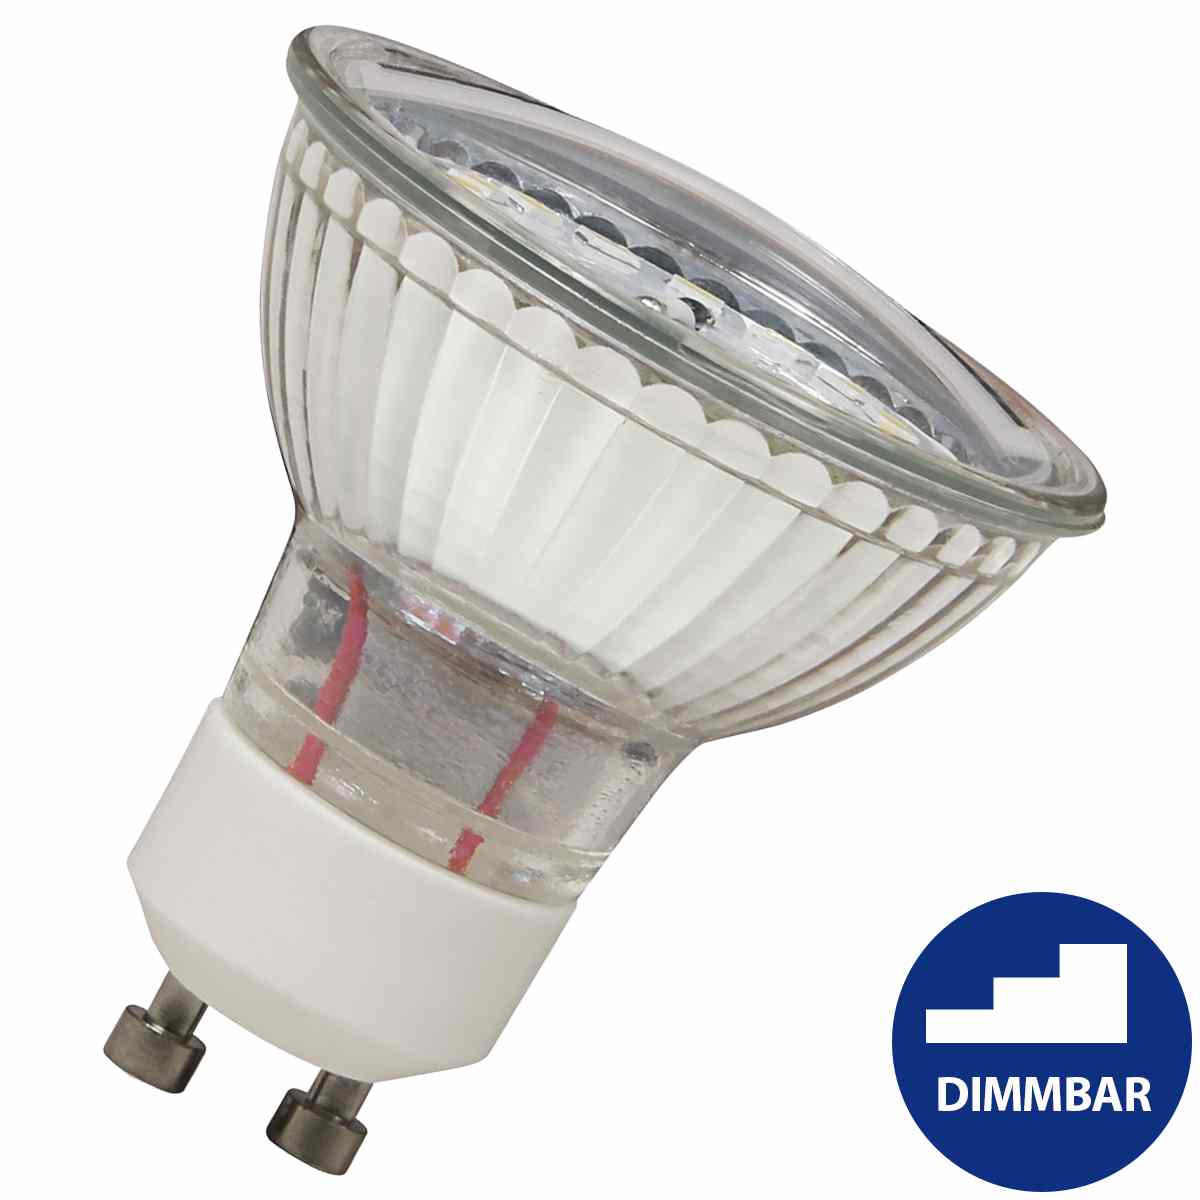 10 X 5W LED GU10 Birne Strahler Leuchtlampe Spot Lampe Reflektor Leuchtmittel EU 